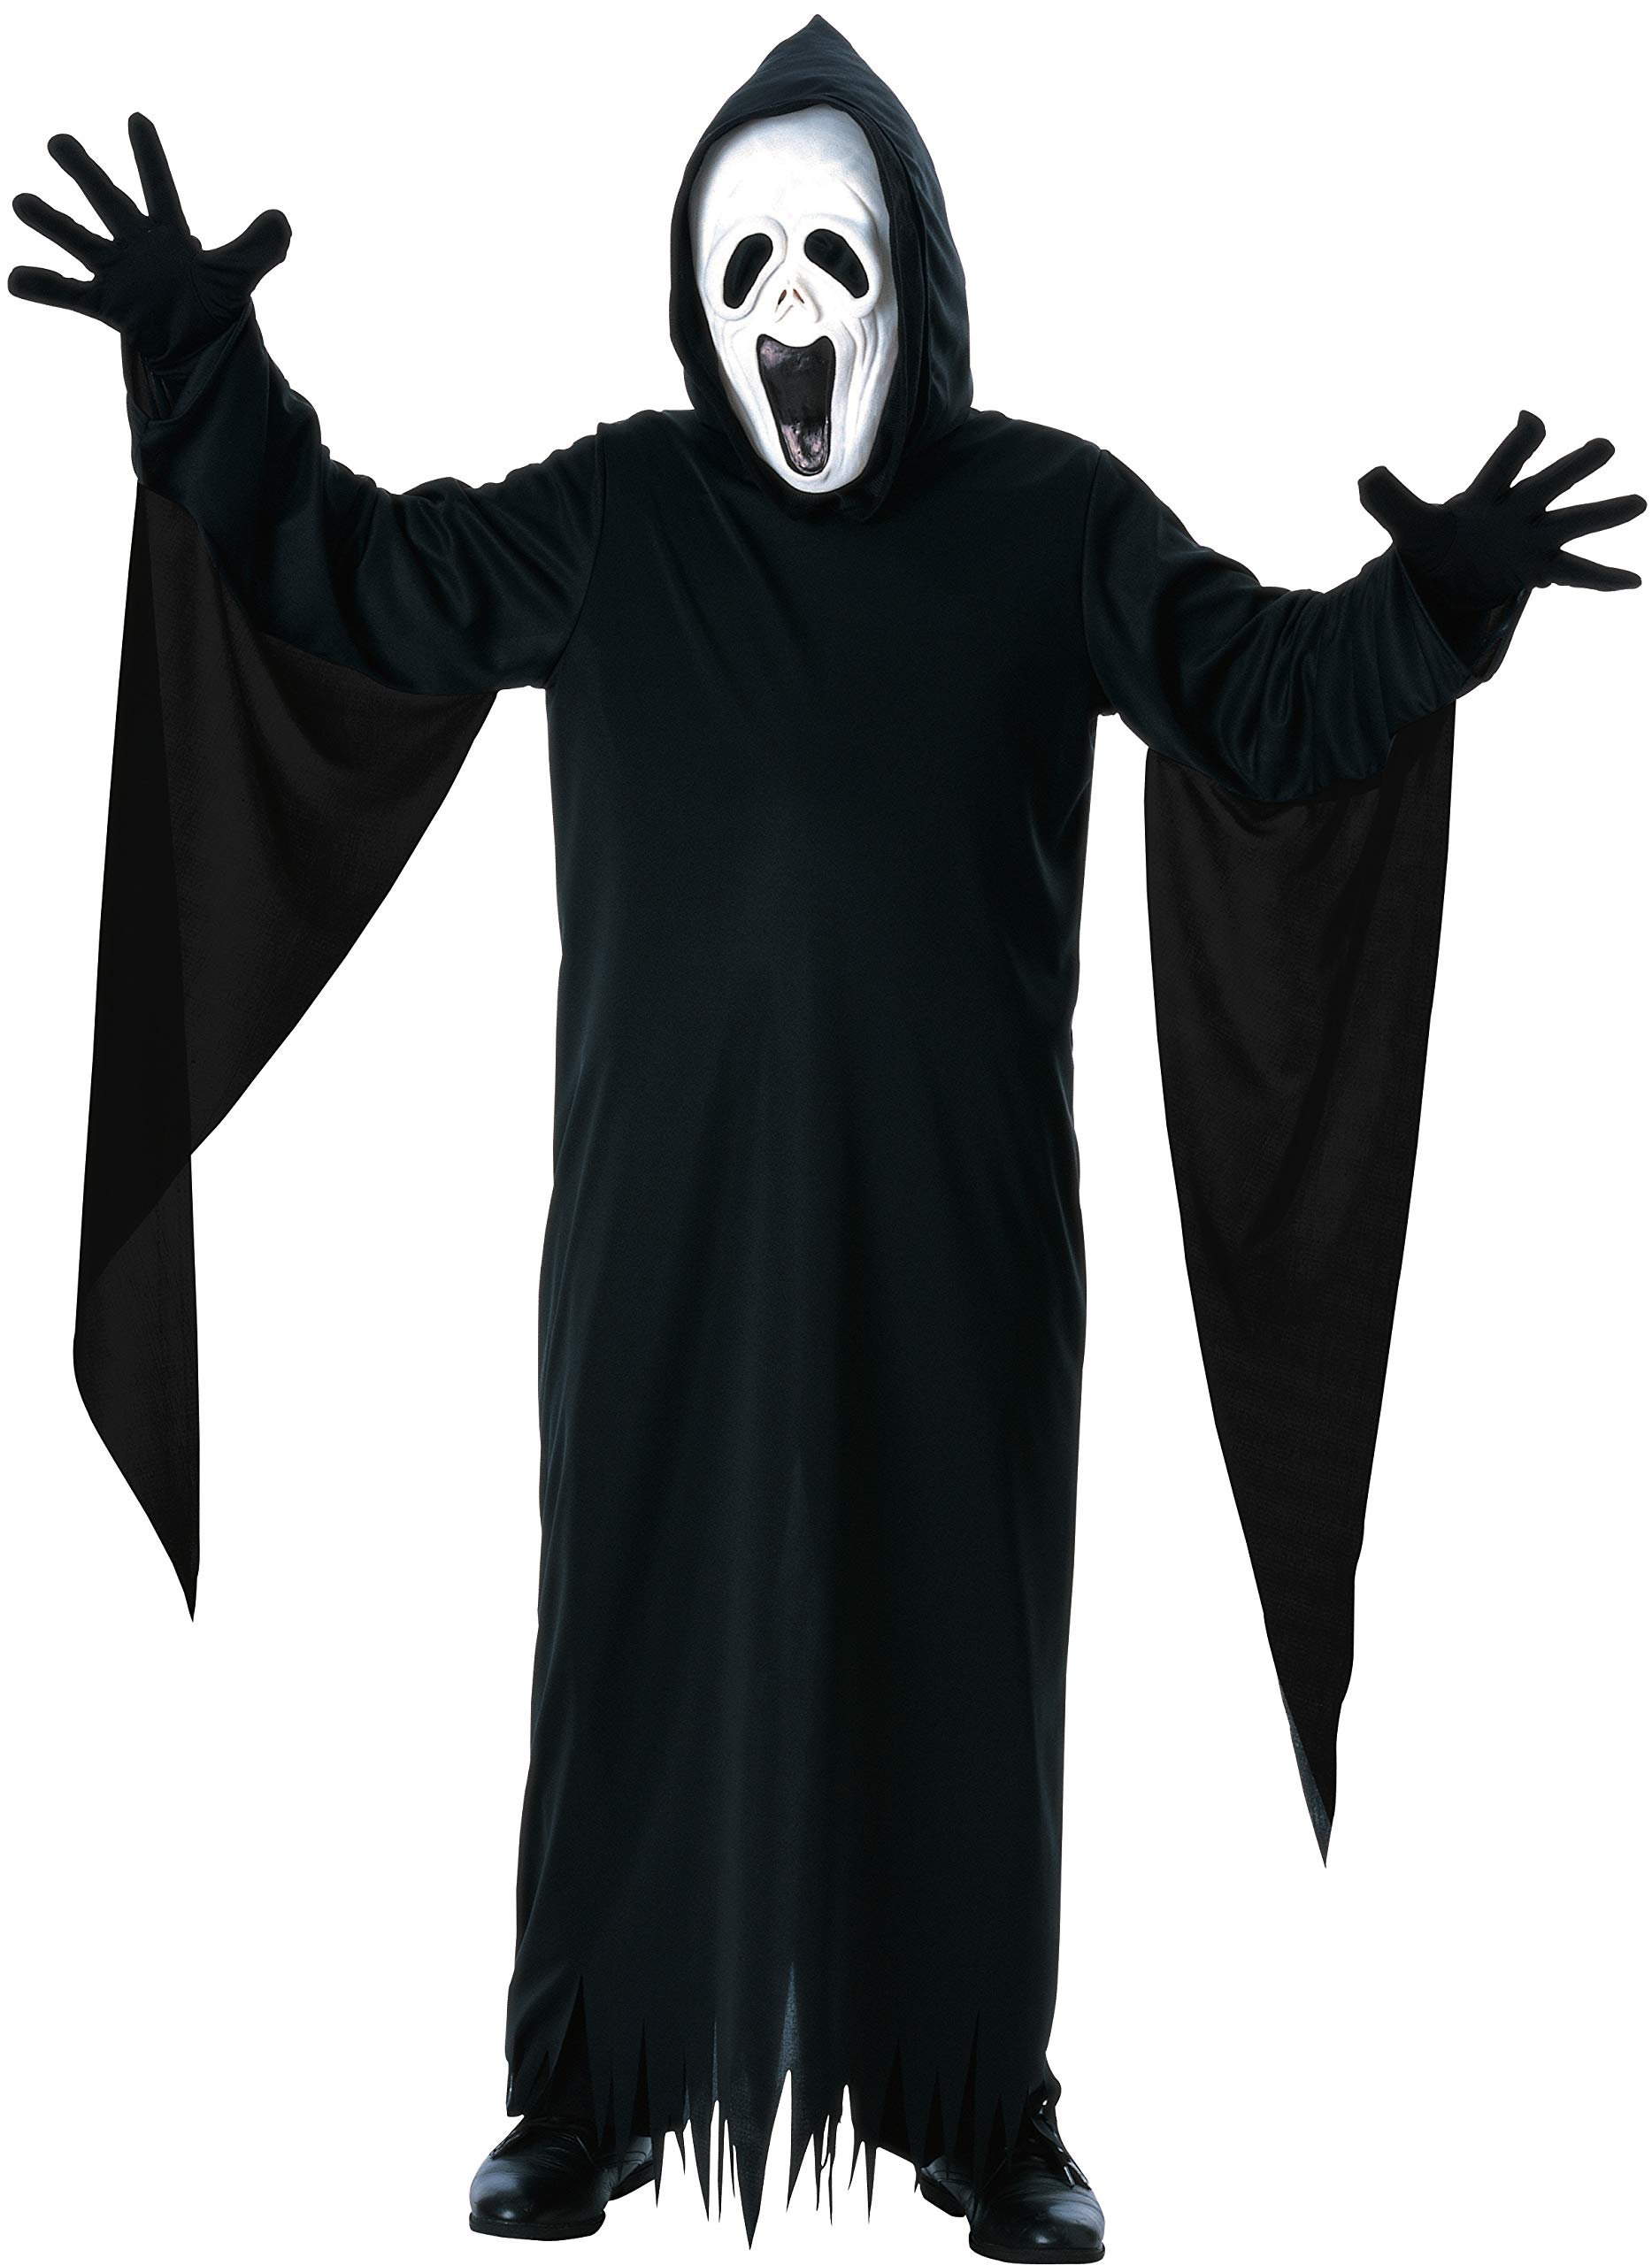 Rubie's unisex child Howling Ghost Children's s Costume, Black, Medium US